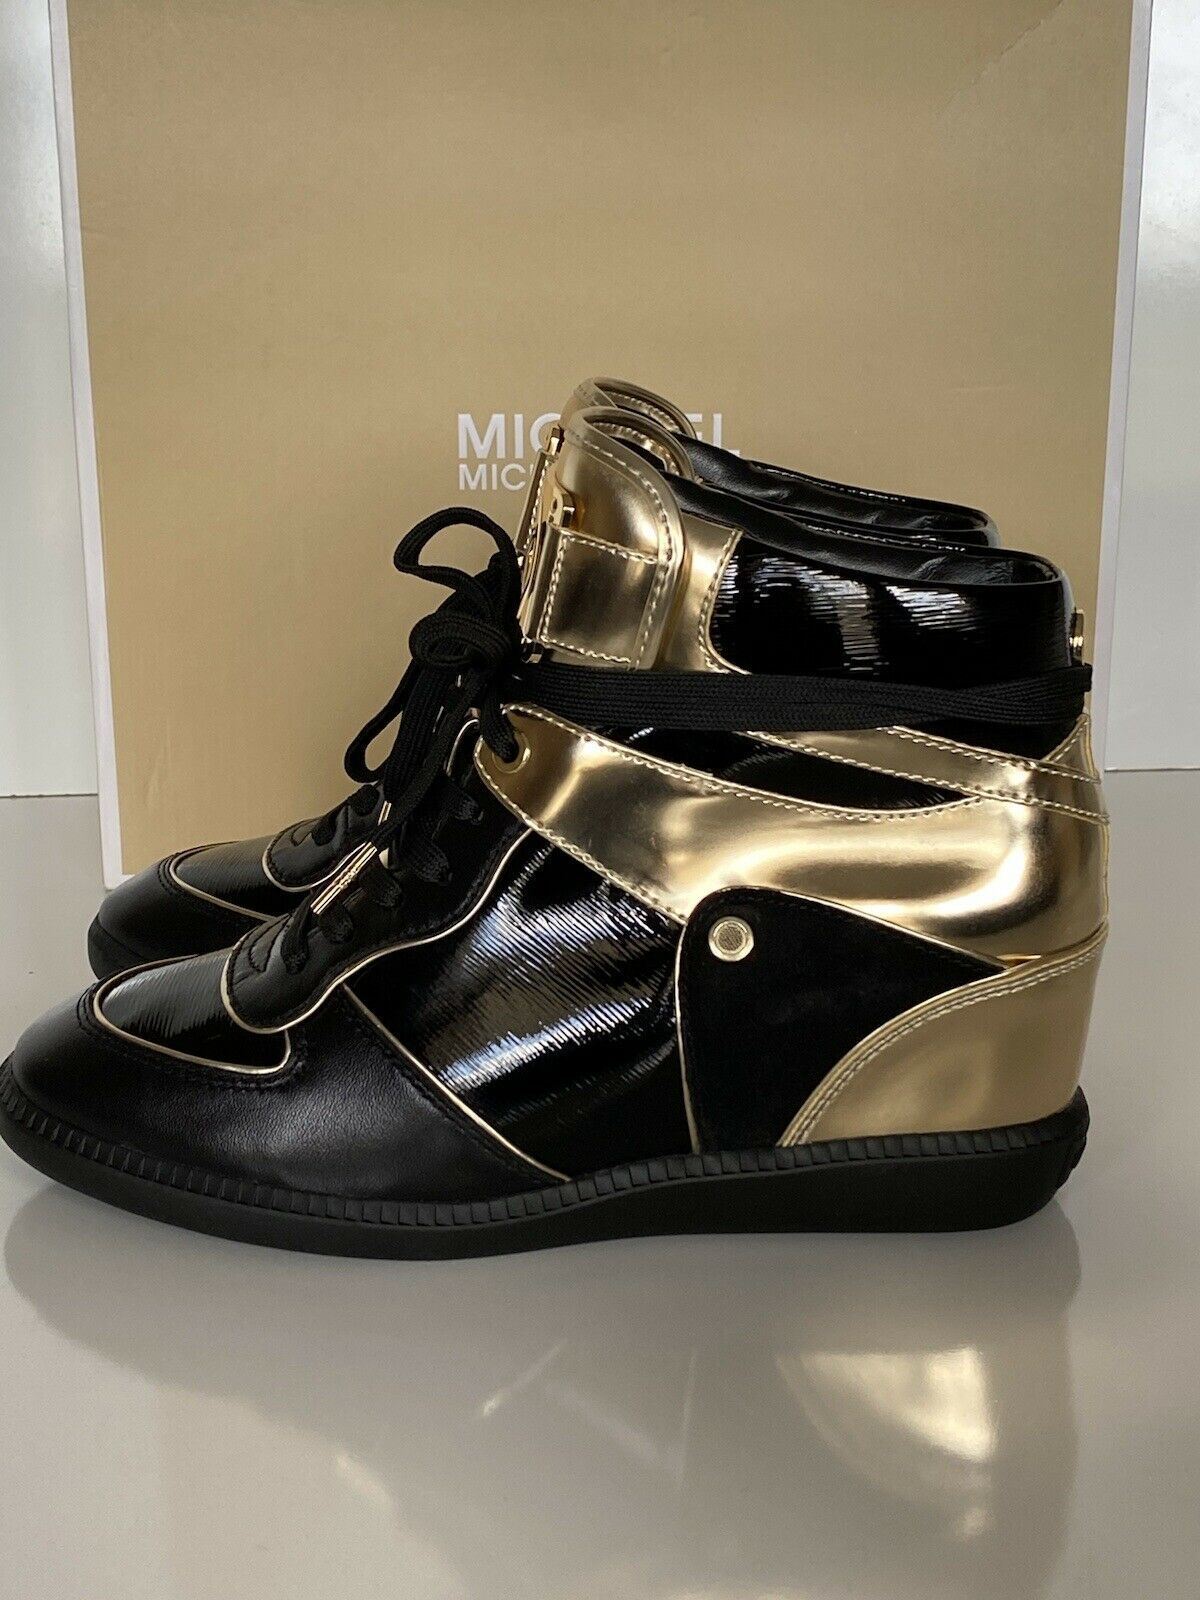 NWB Michael Kors Nikko High Top Sneakers Schwarz Gold Größe 8 US 